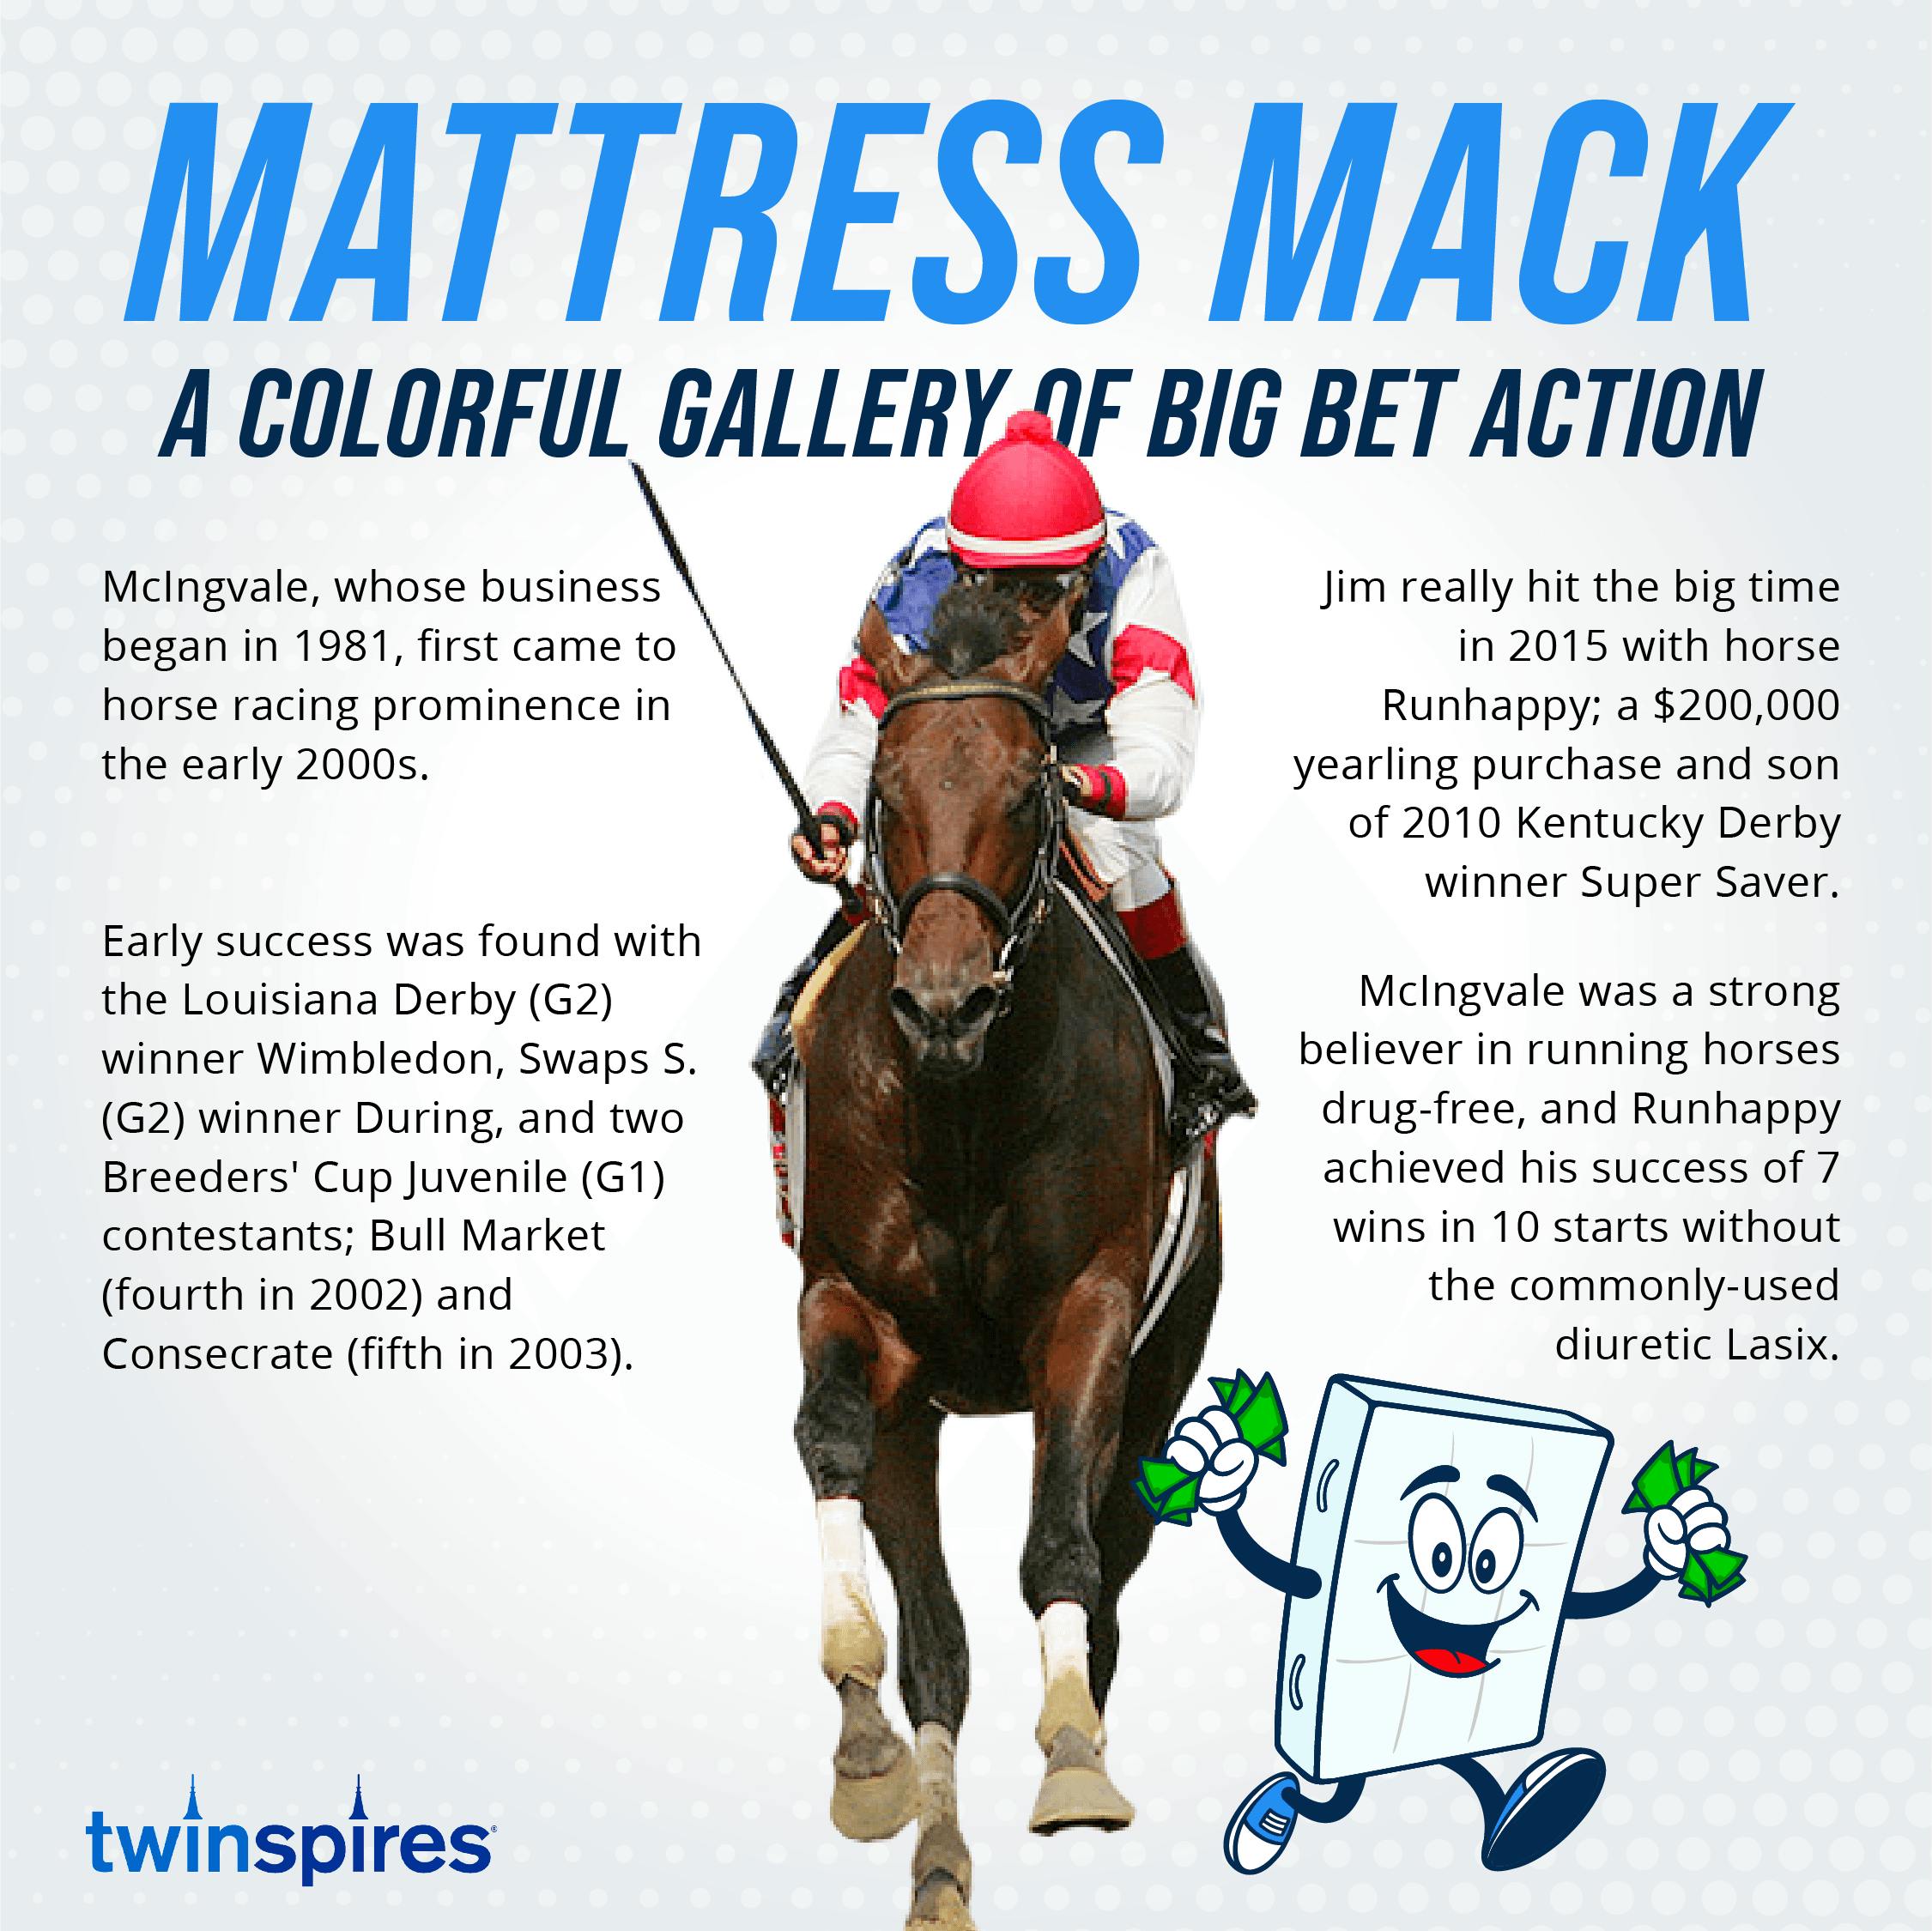 How did Jim Mattress Mack McIngvale get so much money?